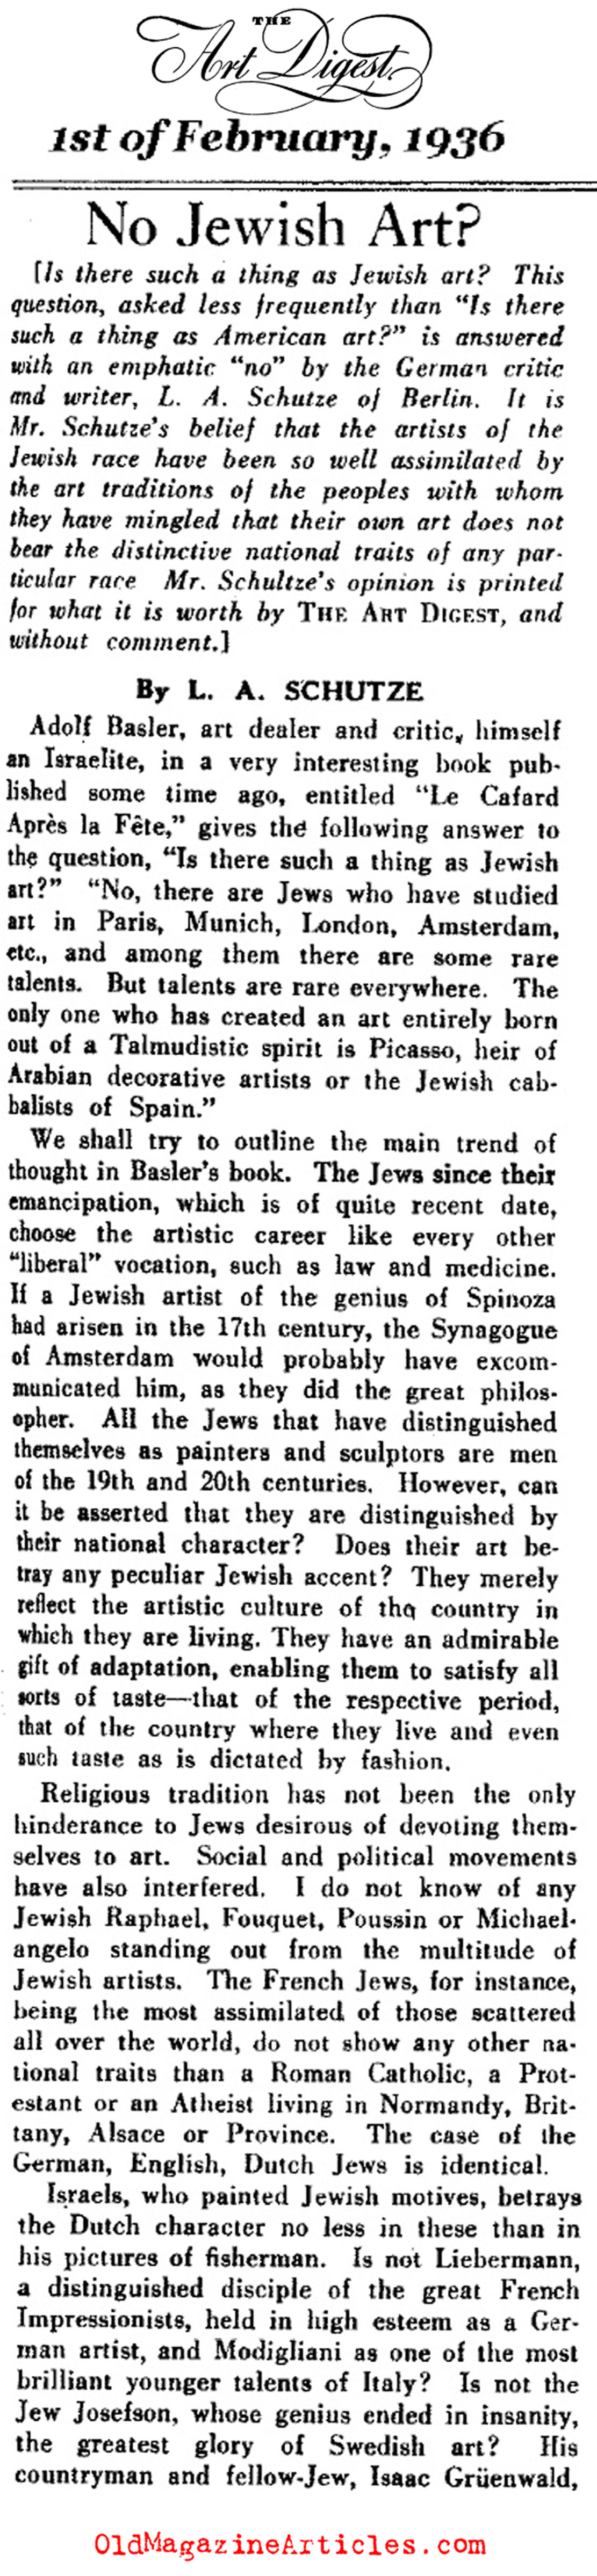 Nazi Art Criticism (Art Digest, 1936)